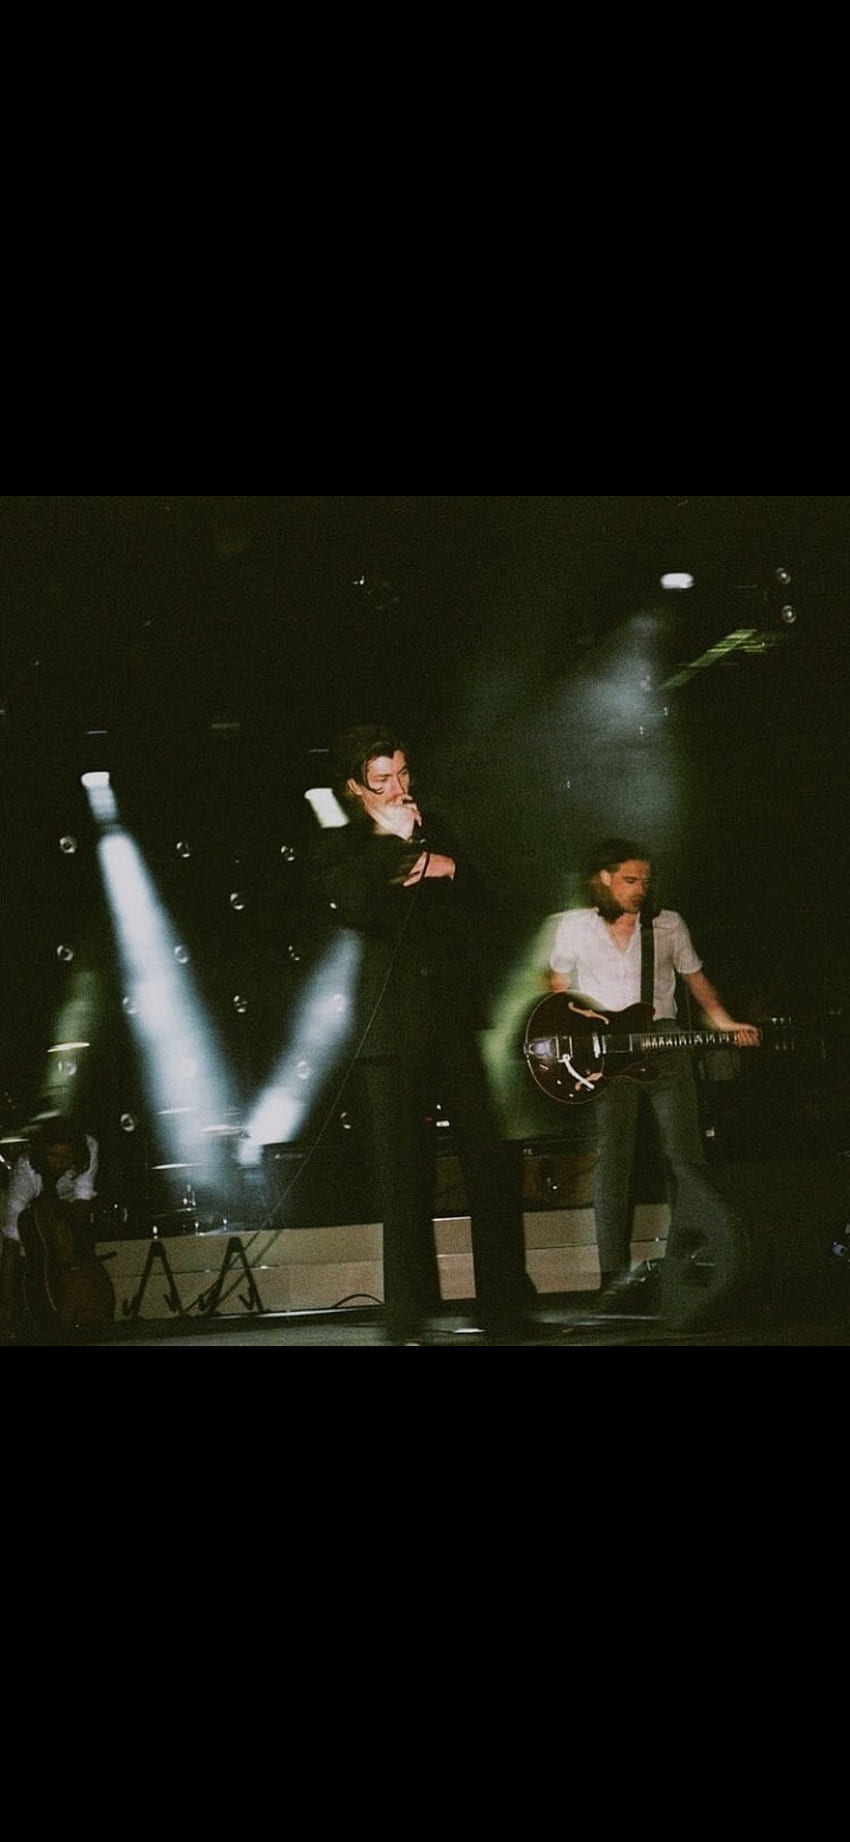 Turner, Alex Turner, Arctic Monkeys Papel de parede de celular HD